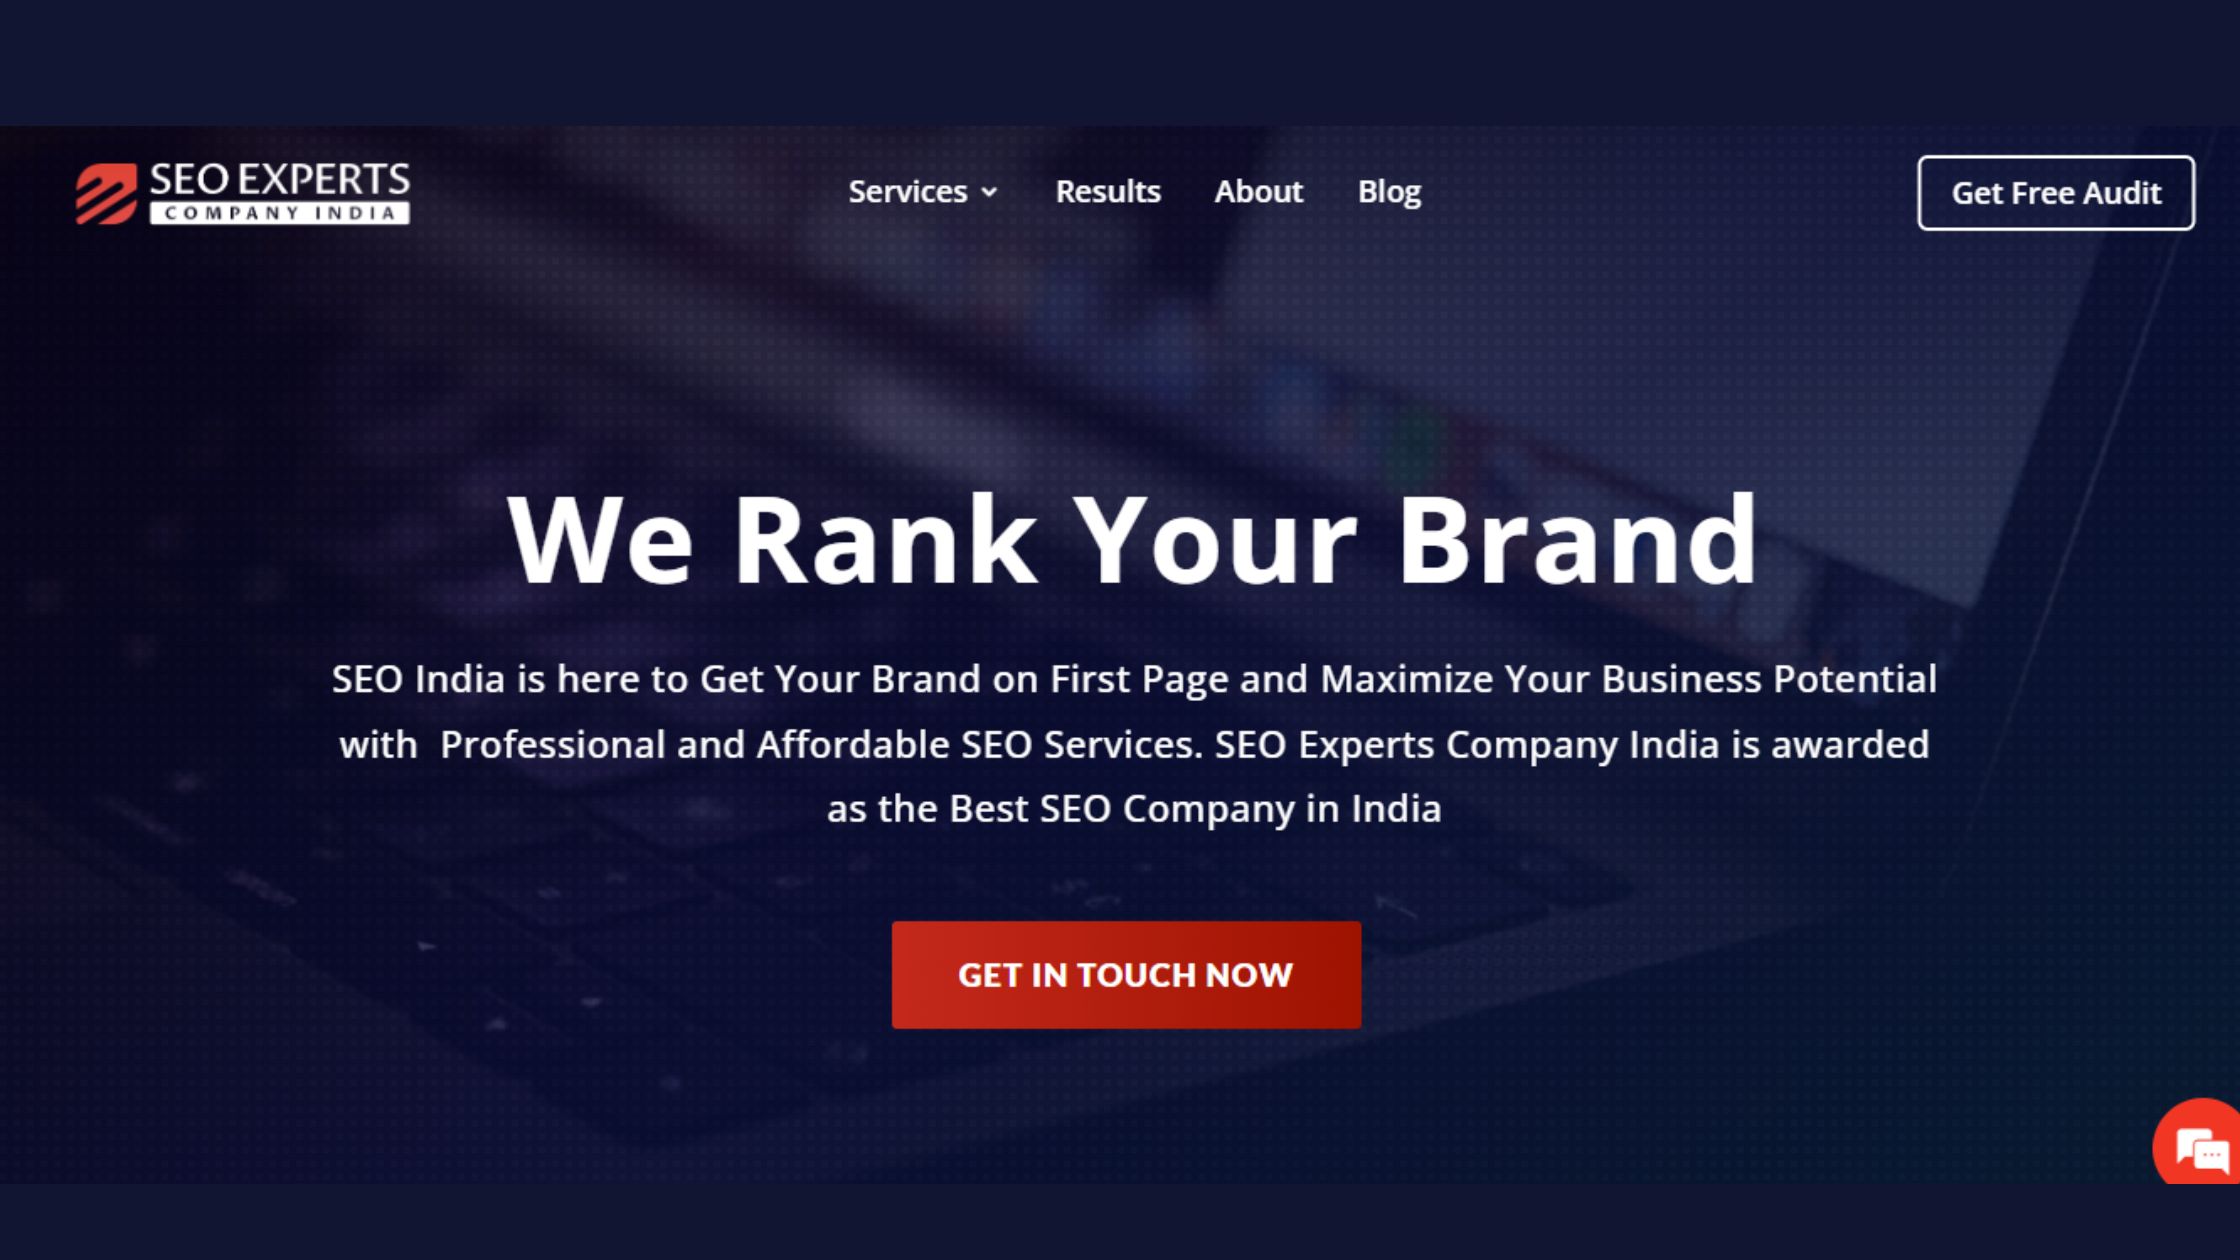 SEO experts company india - top 10 seo companies in india 